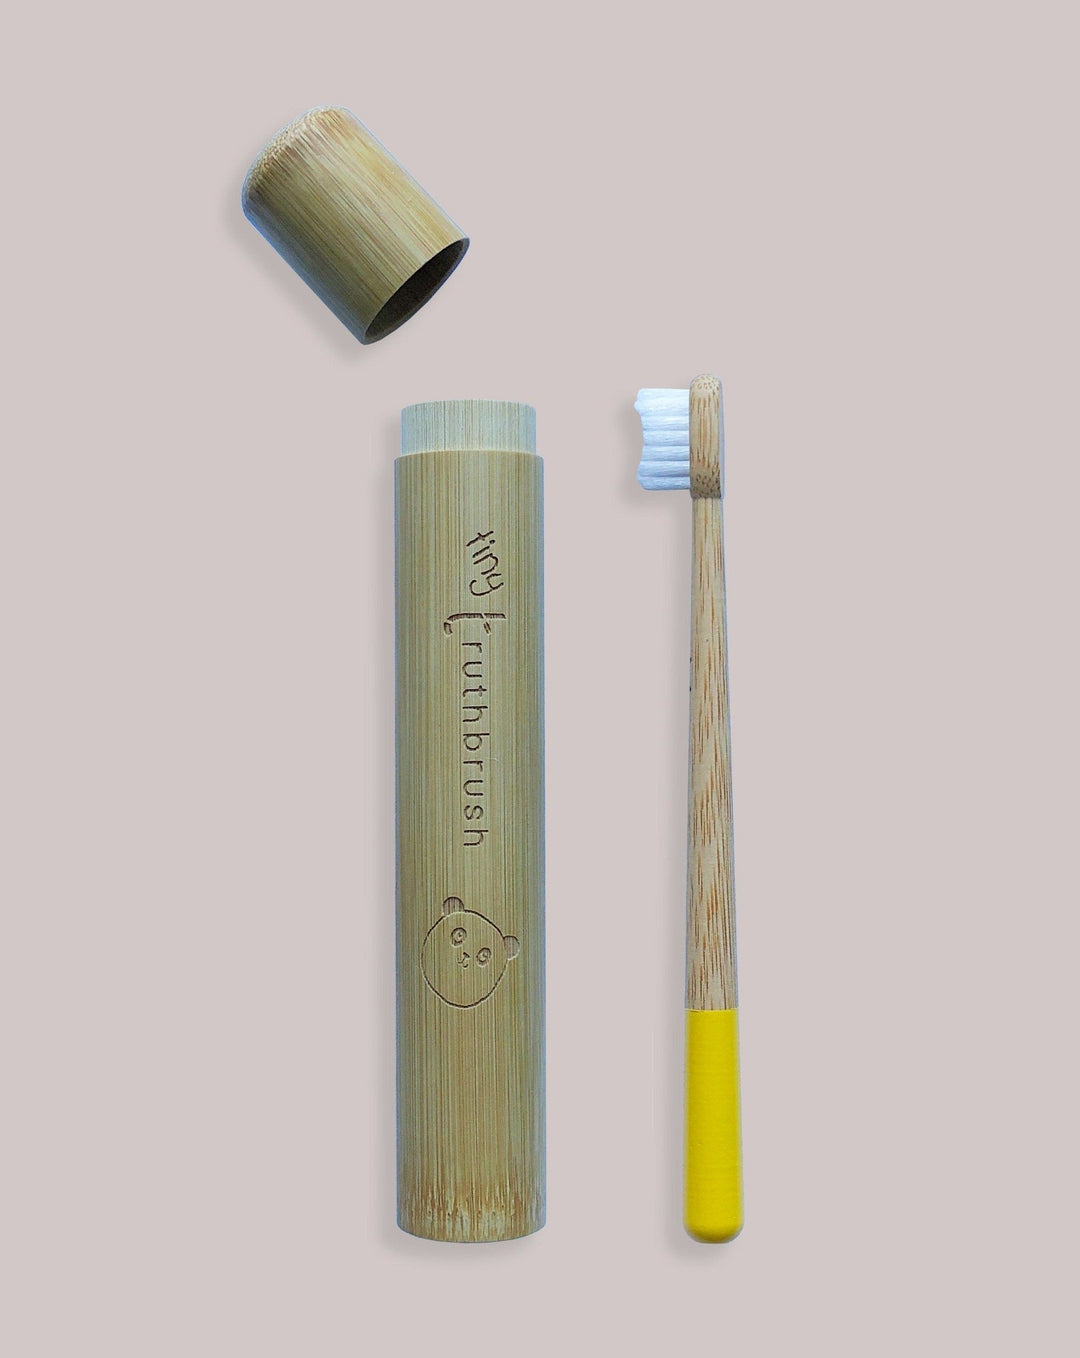 TRUTHBRUSH TOOTHBRUSH Toothbrush Travel Case - Tiny Sustainable Toothbrush Travel Case | Kids | 3133